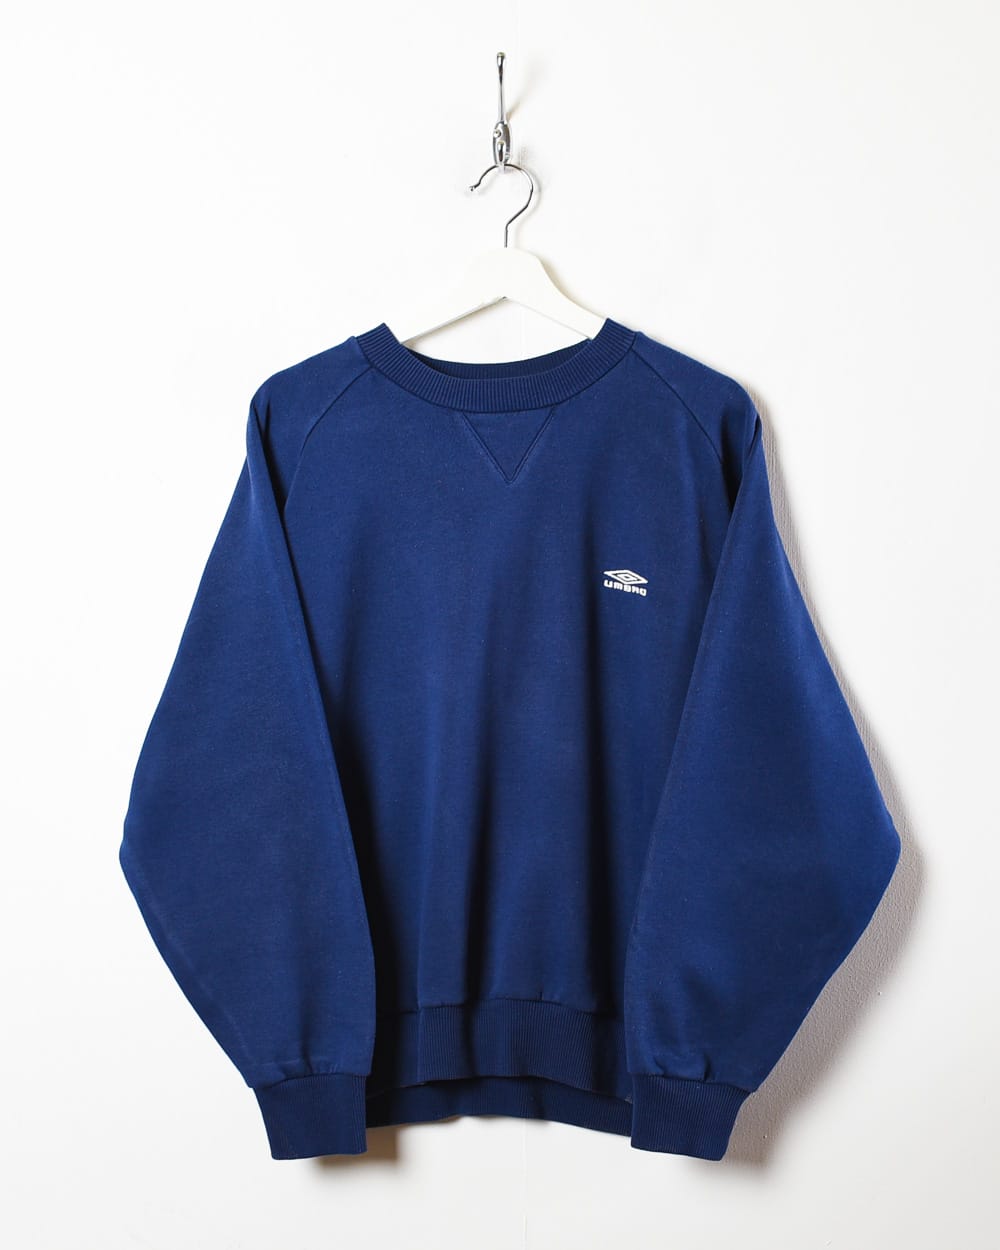 Navy Umbro Sweatshirt - Medium